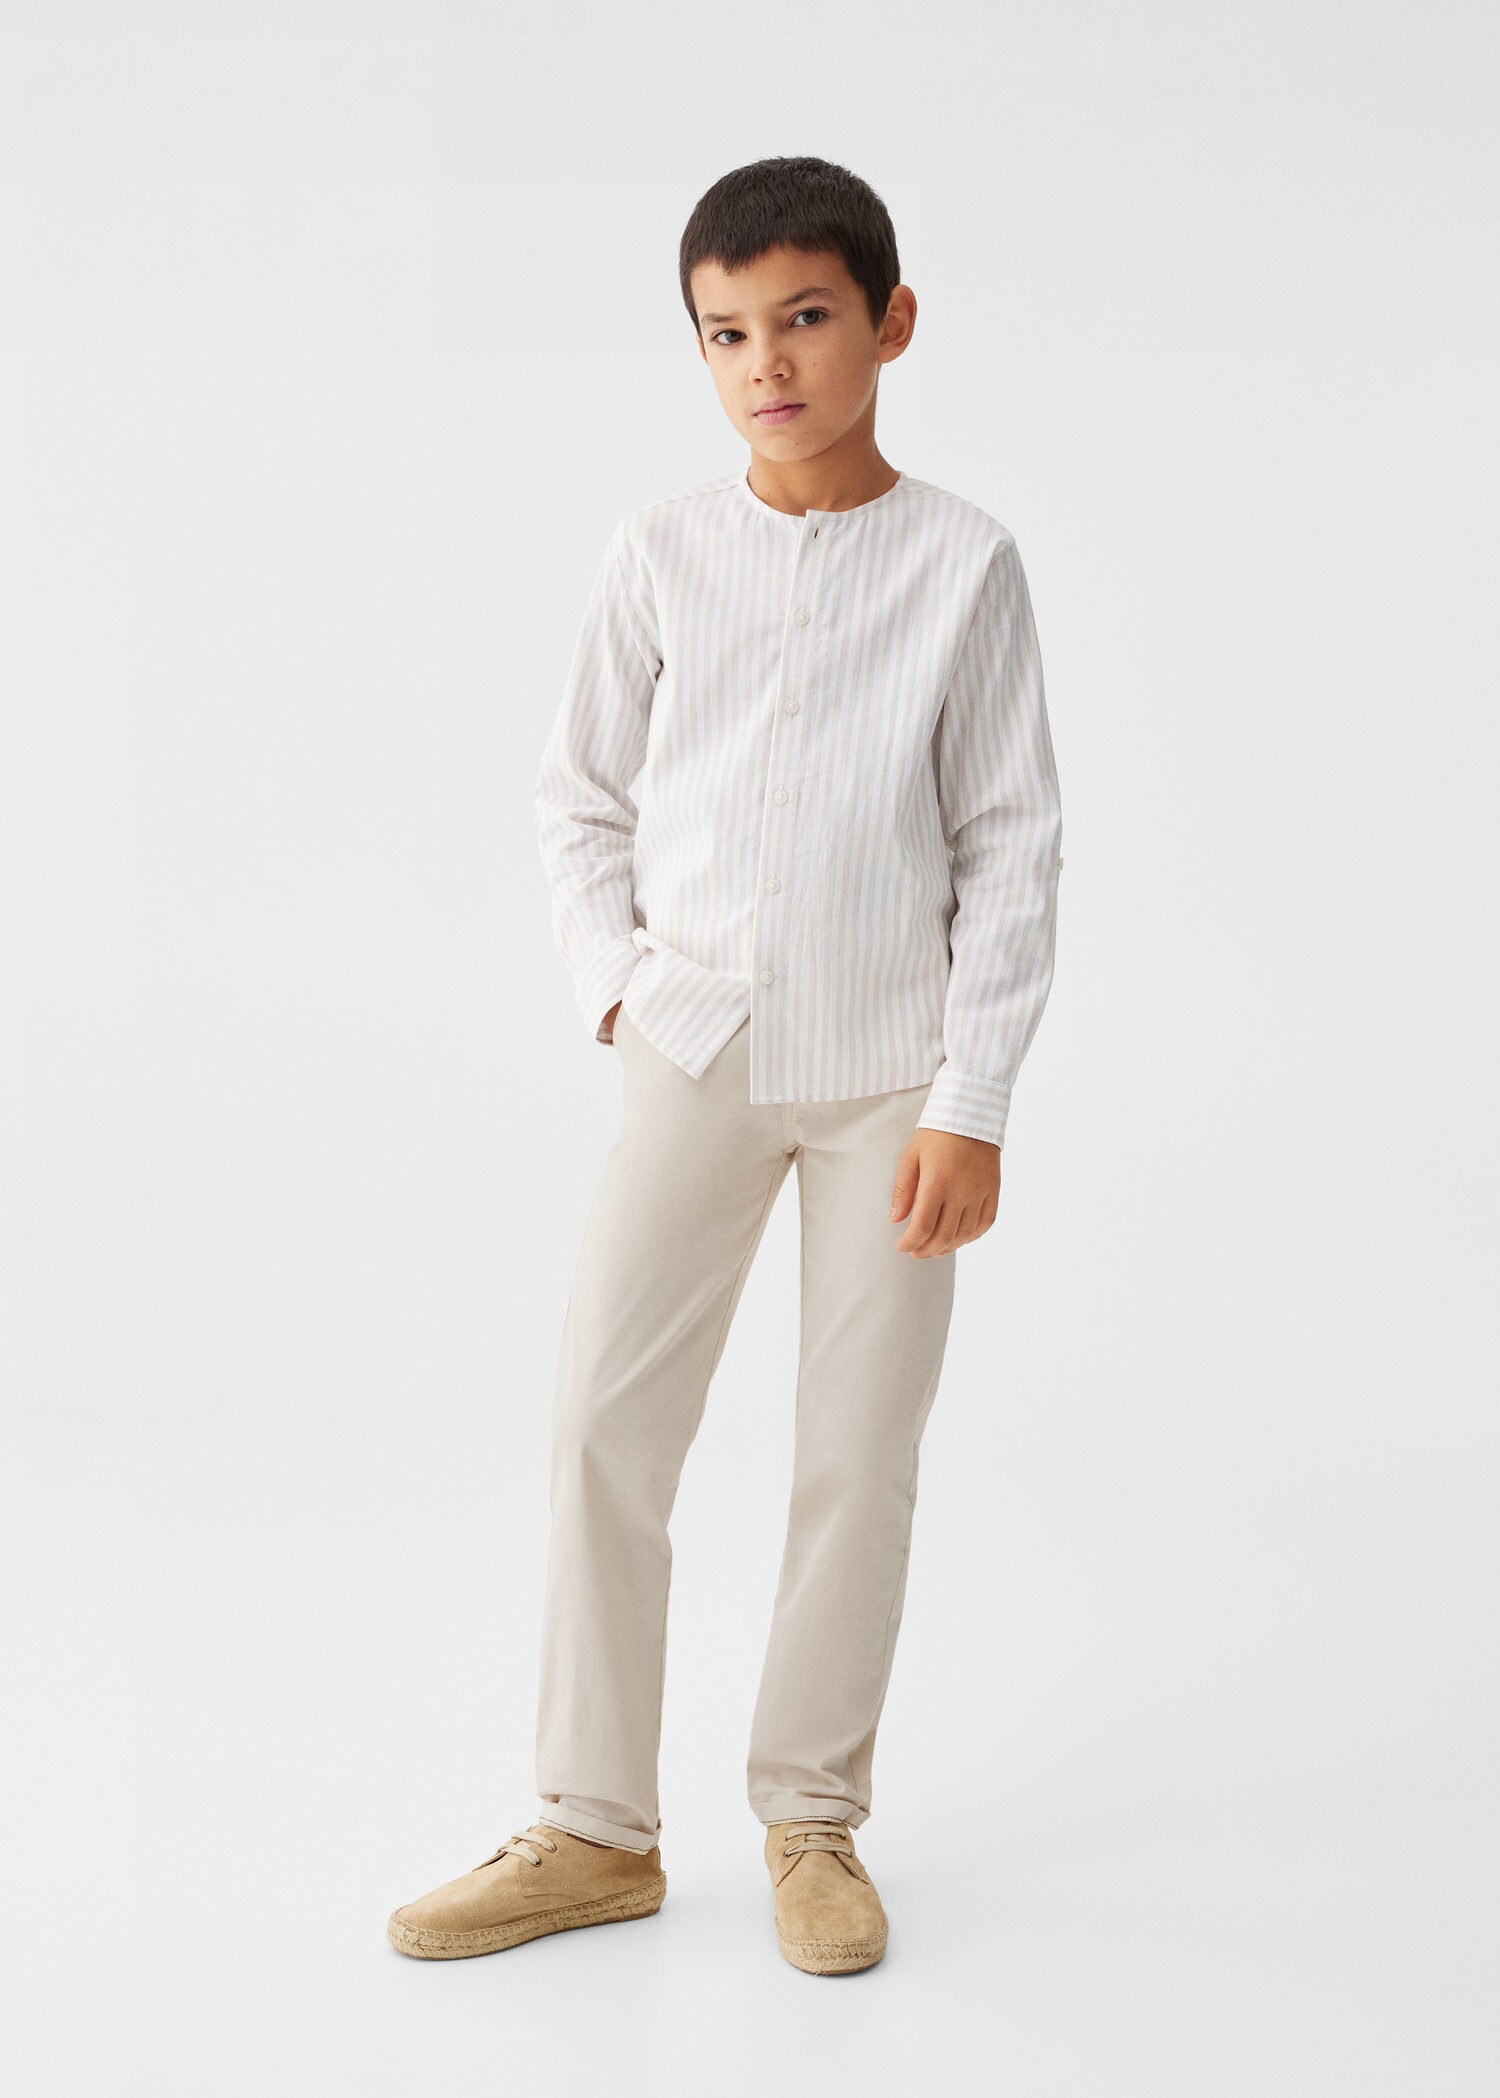 Buy Palm Tree Kids White Cotton Trousers for Boys Clothing Online @ Tata  CLiQ